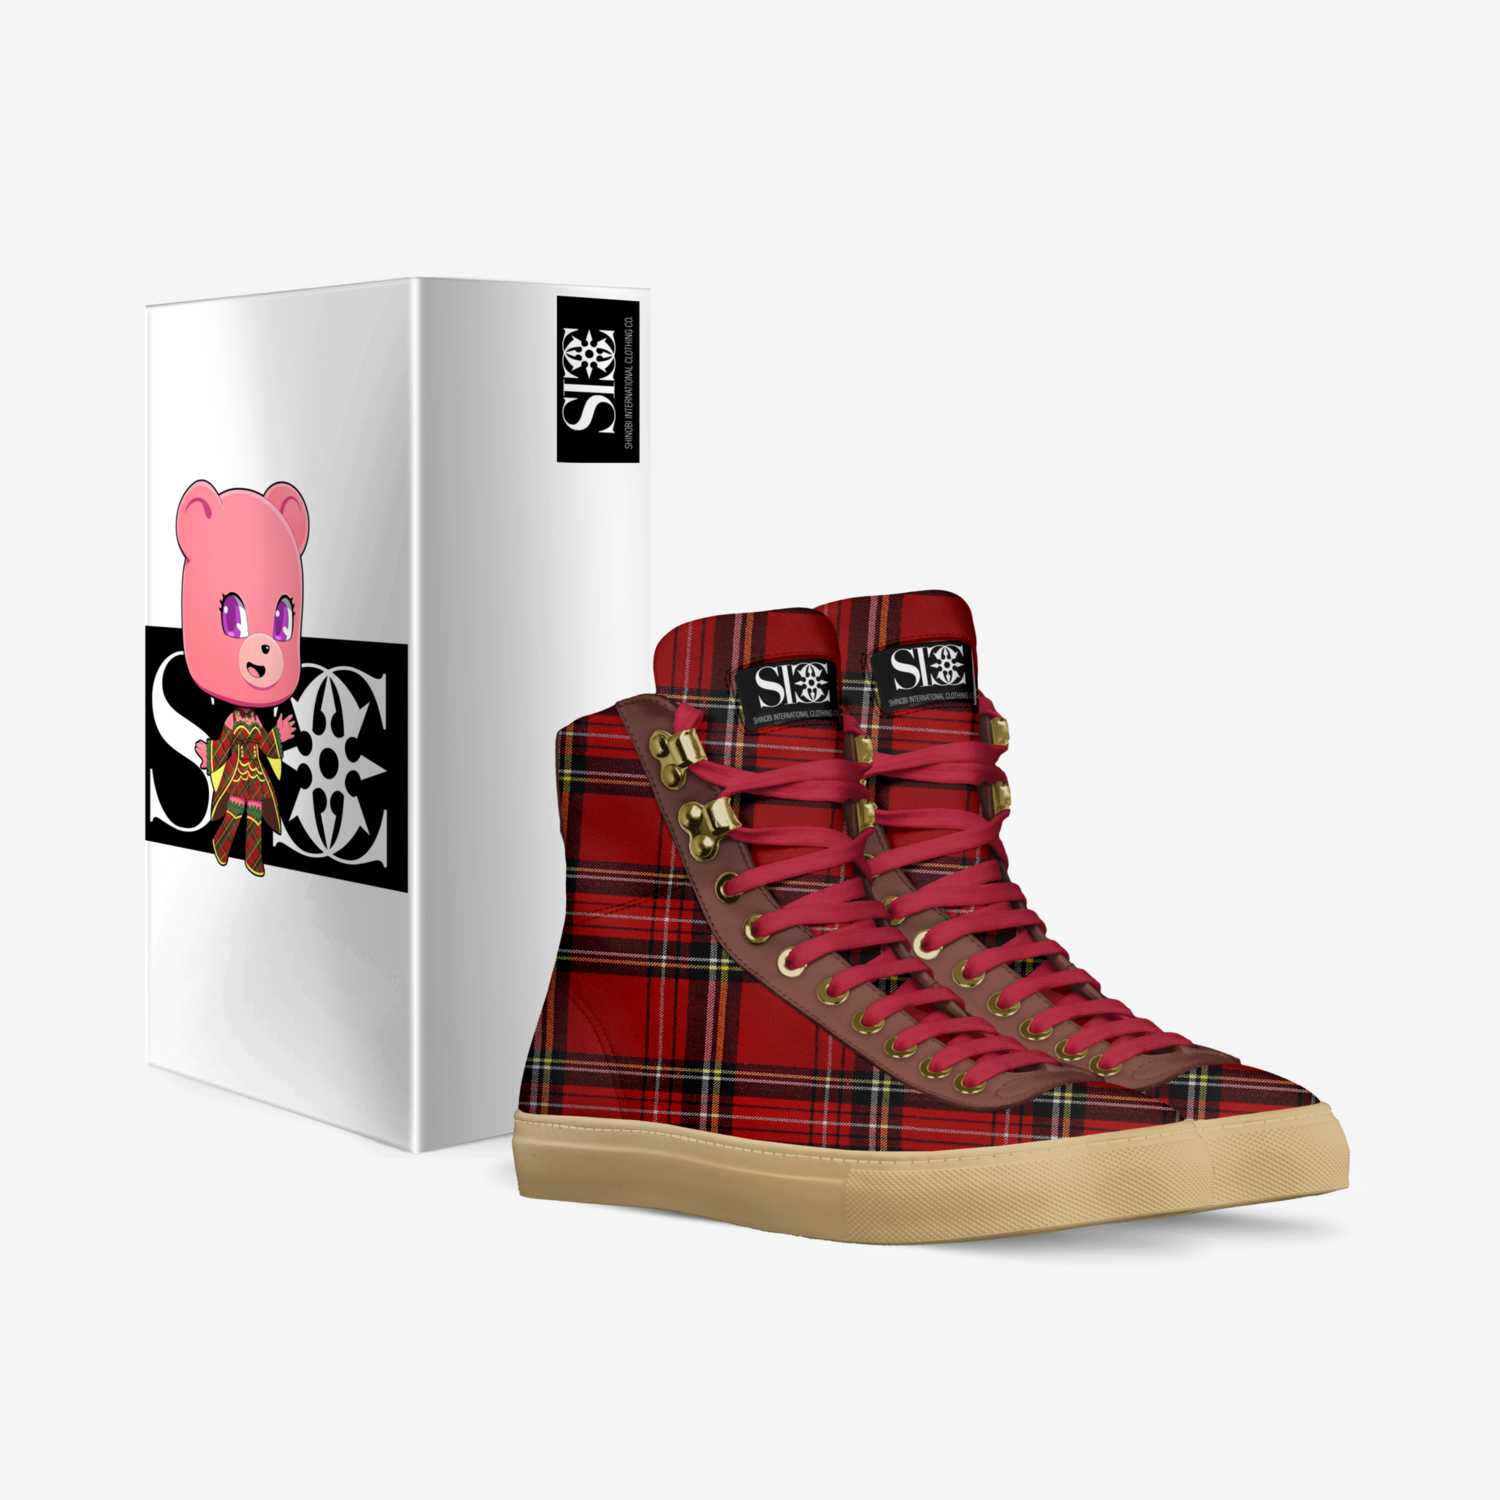 Strawberry Gummi H custom made in Italy shoes by Shinobi International Clothing Co. | Box view